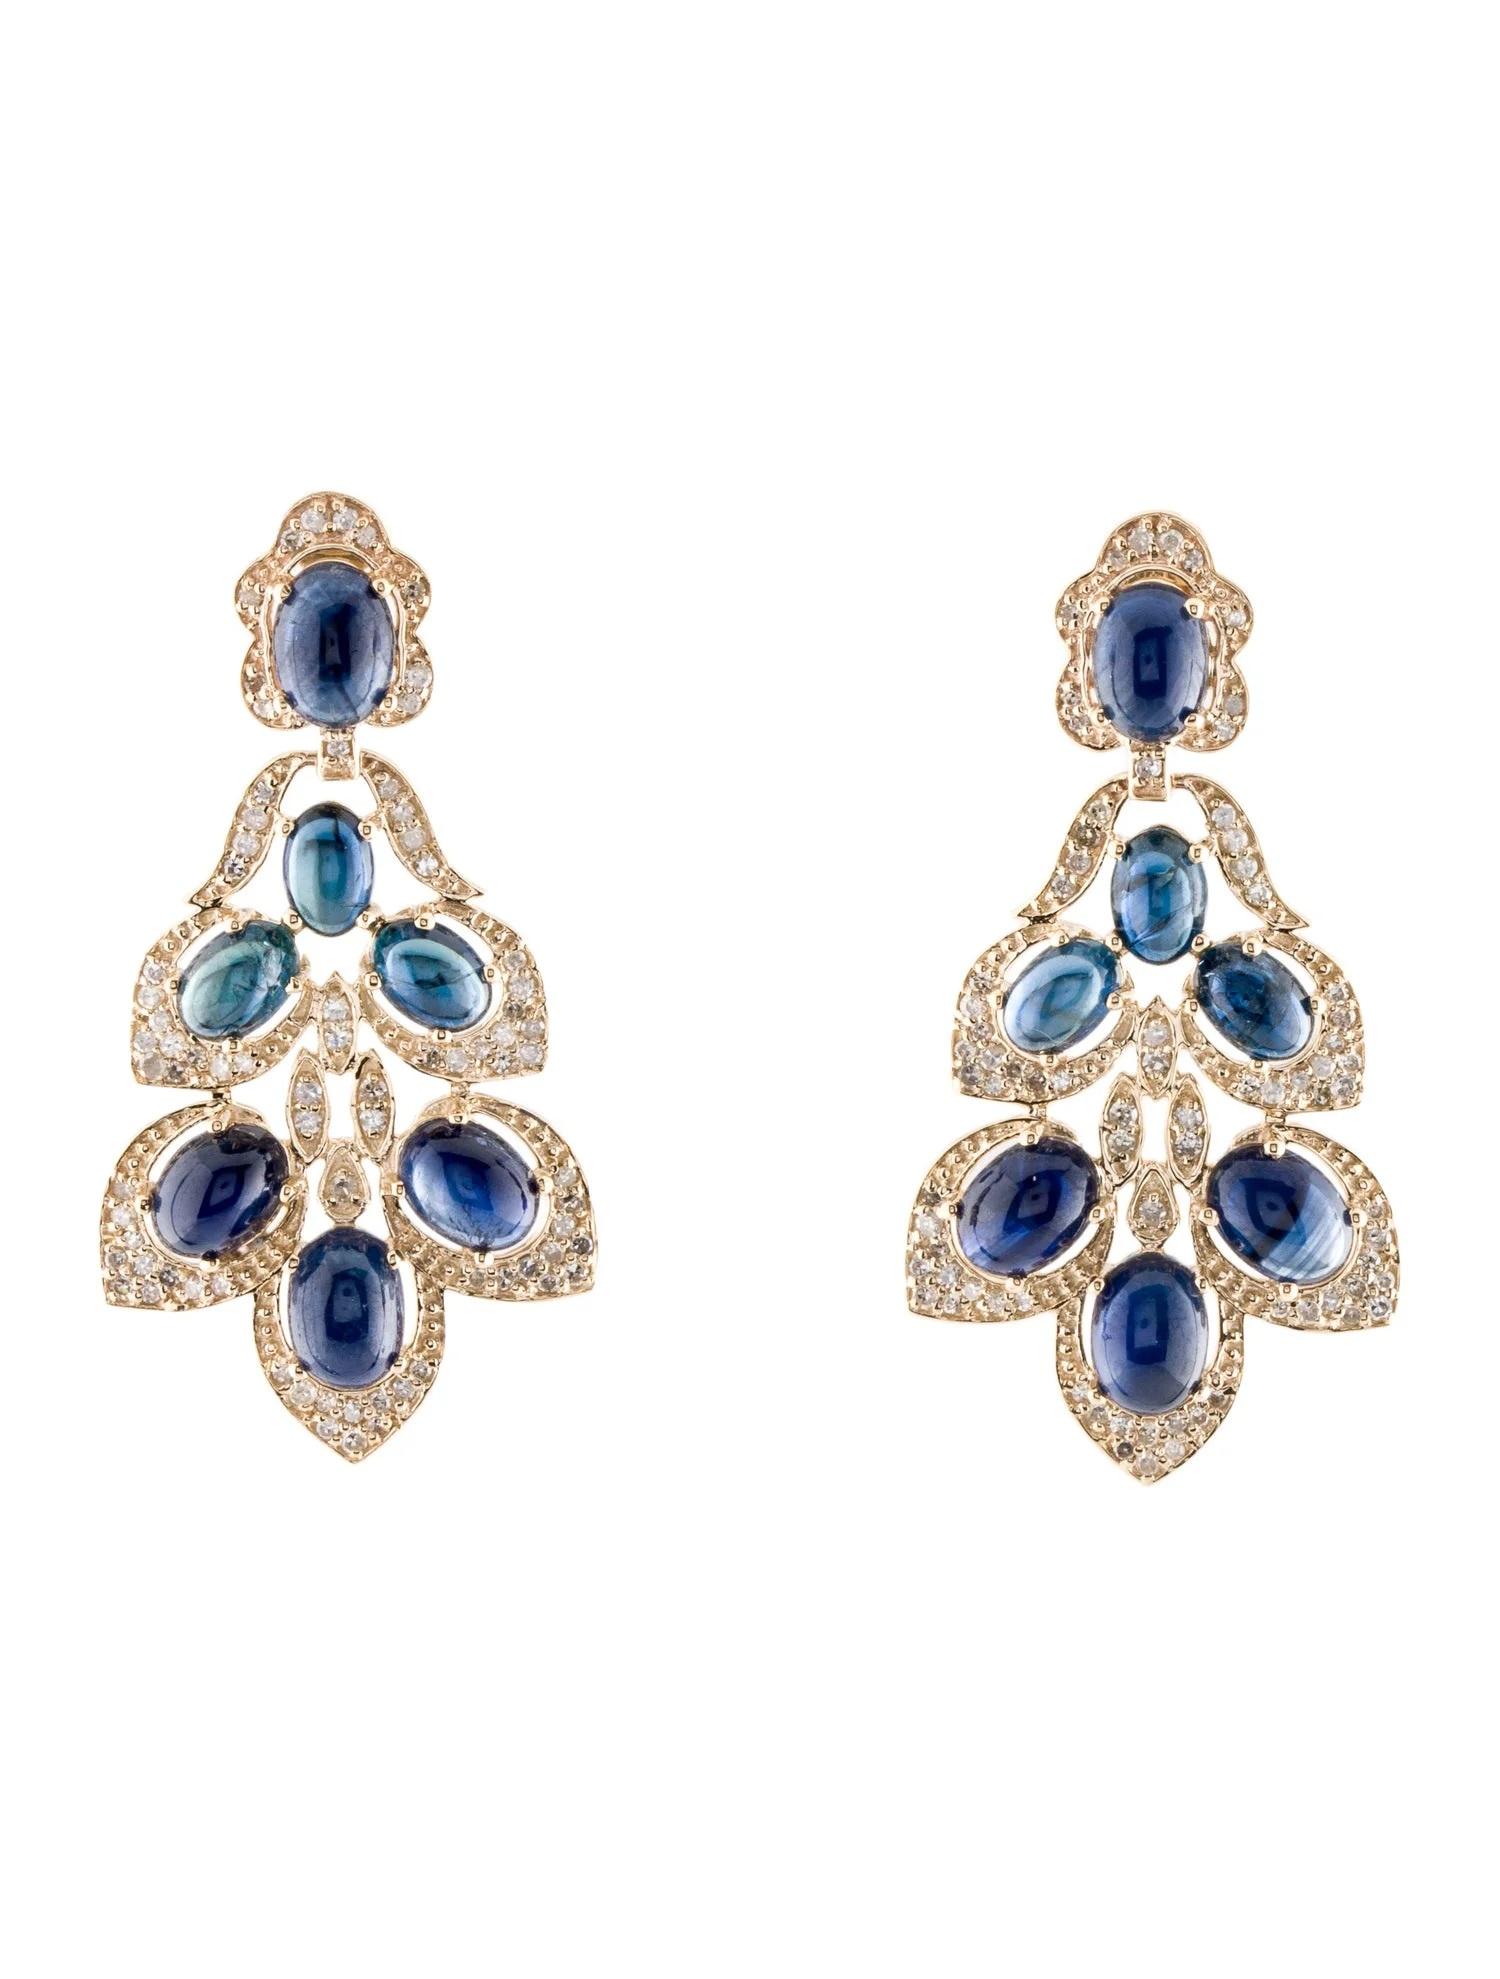 Oval Cut 14K Sapphire & Diamond Drop Earrings - 15.02ctw Oval Sapphire Cabochons For Sale